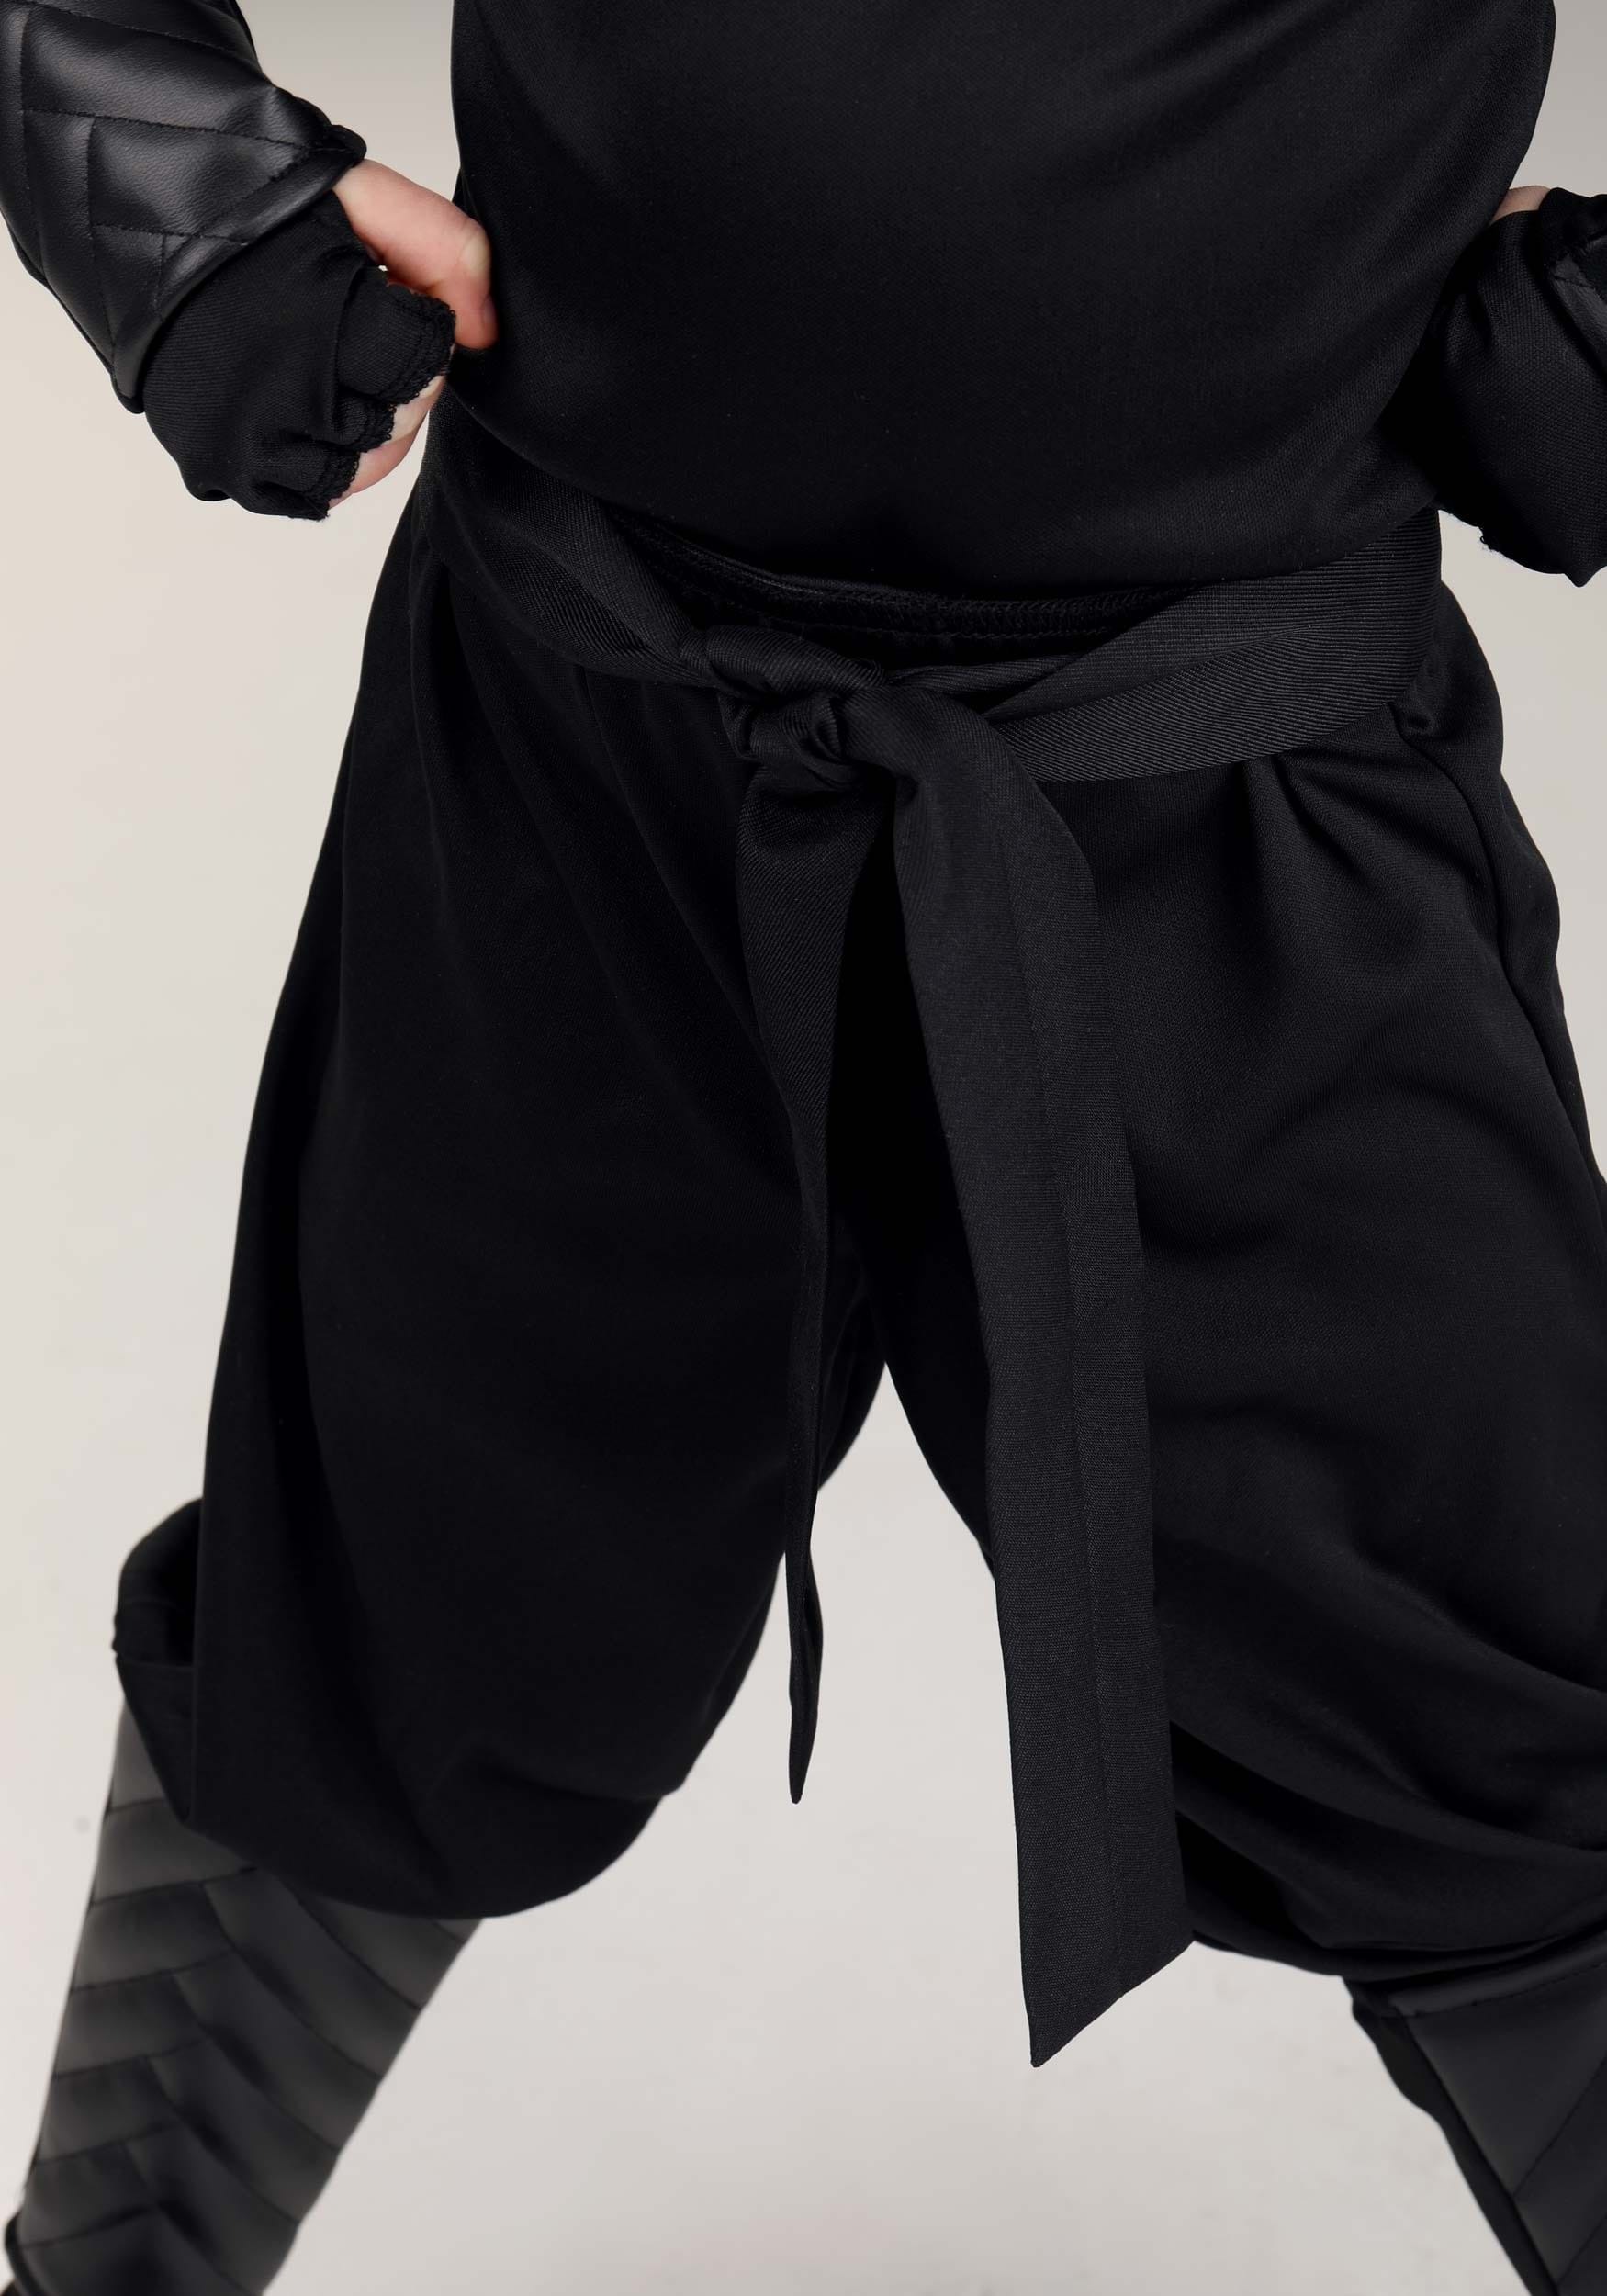 Child Stealth Shinobi Ninja Costume